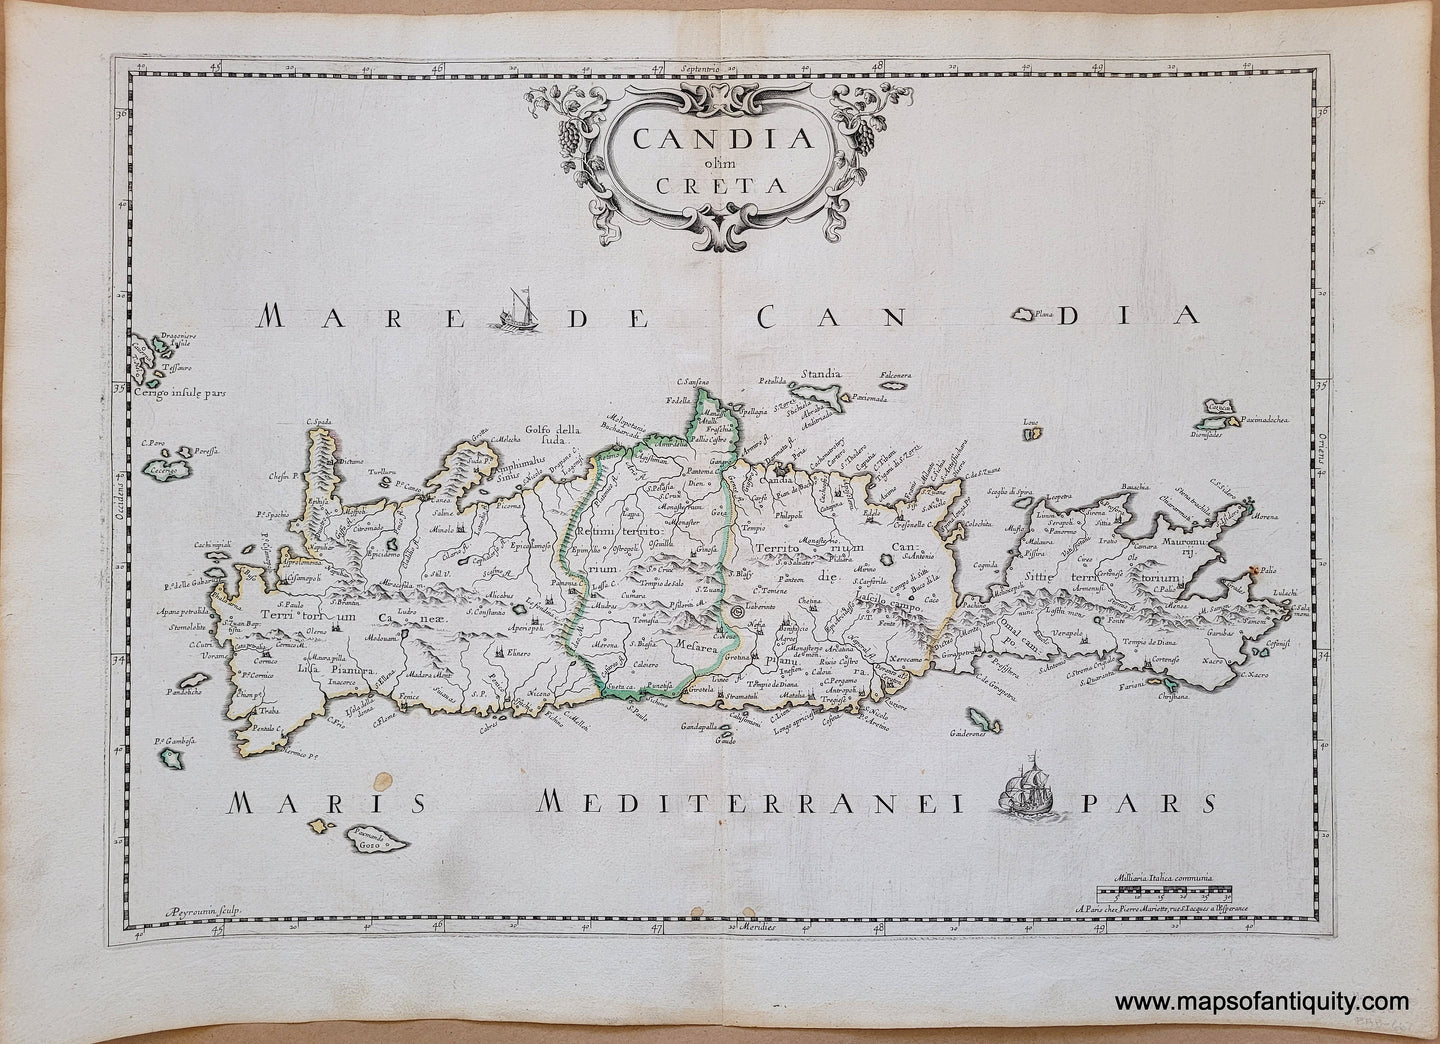 Antique-Map-Candia-olim-Creta-Crete-labyrinth-Mynotaur-Europe-Greece-1650-Pierre-Mariette-I-Maps-Of-Antiquity